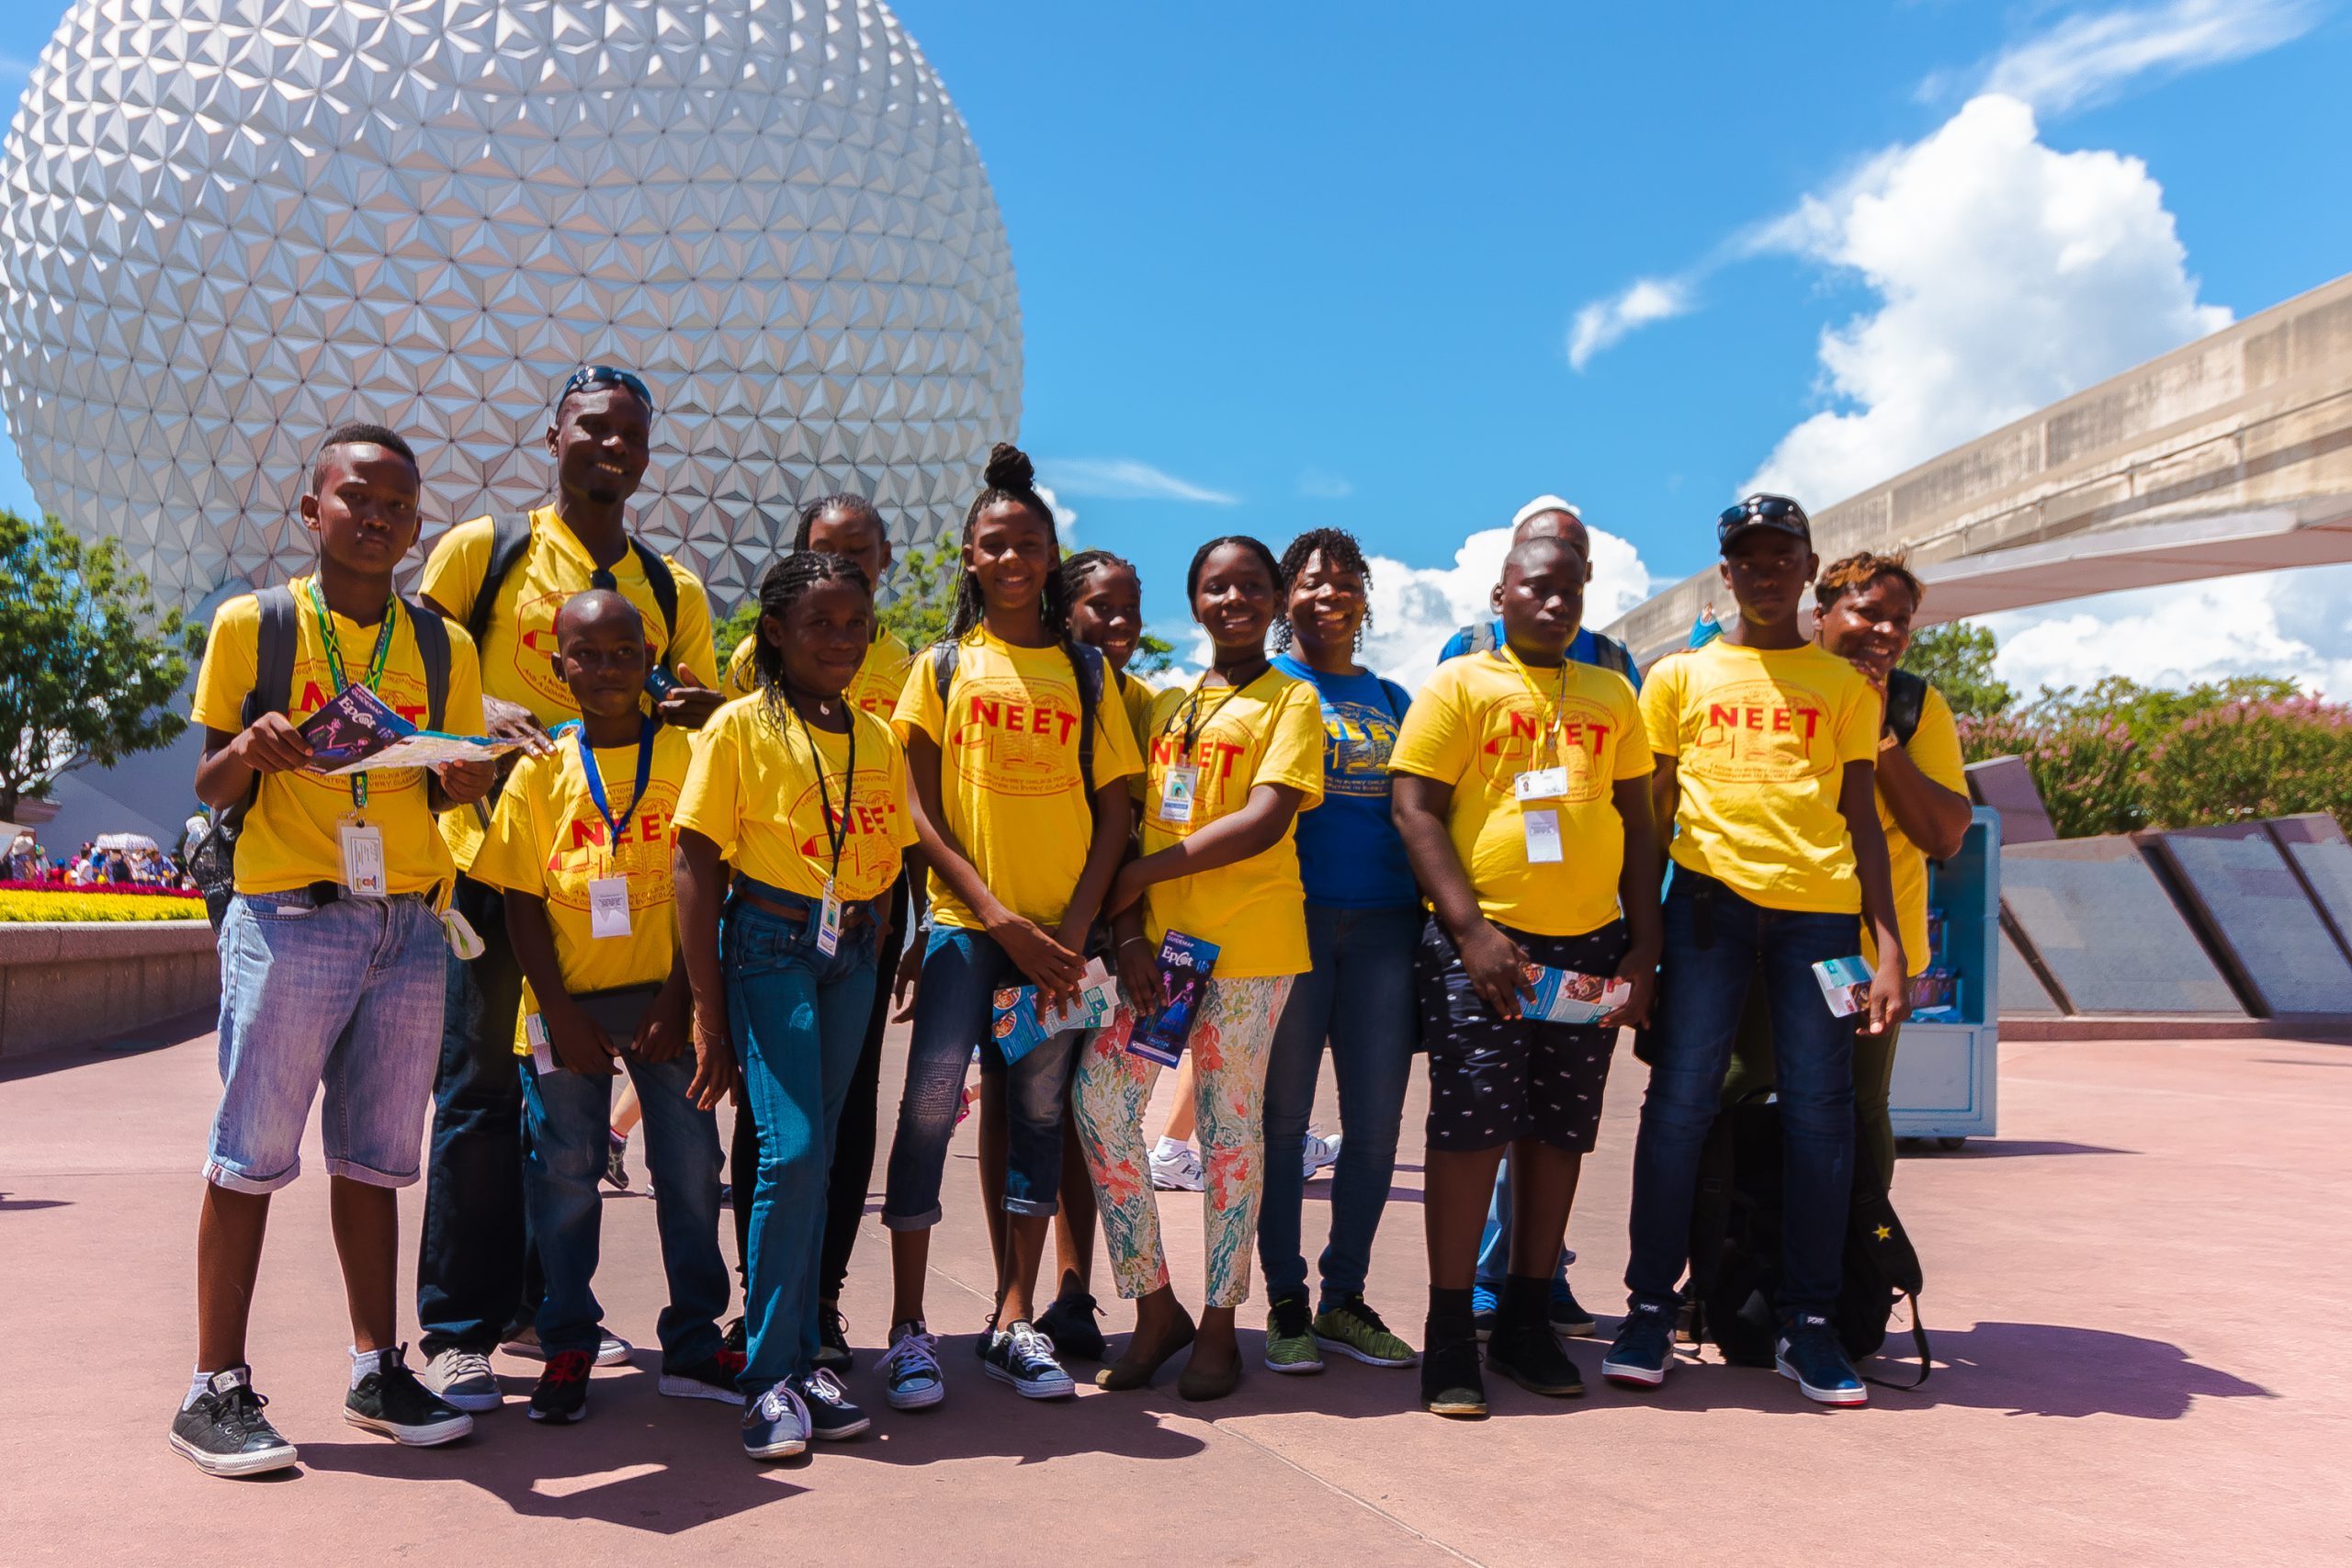 Students at Disney World